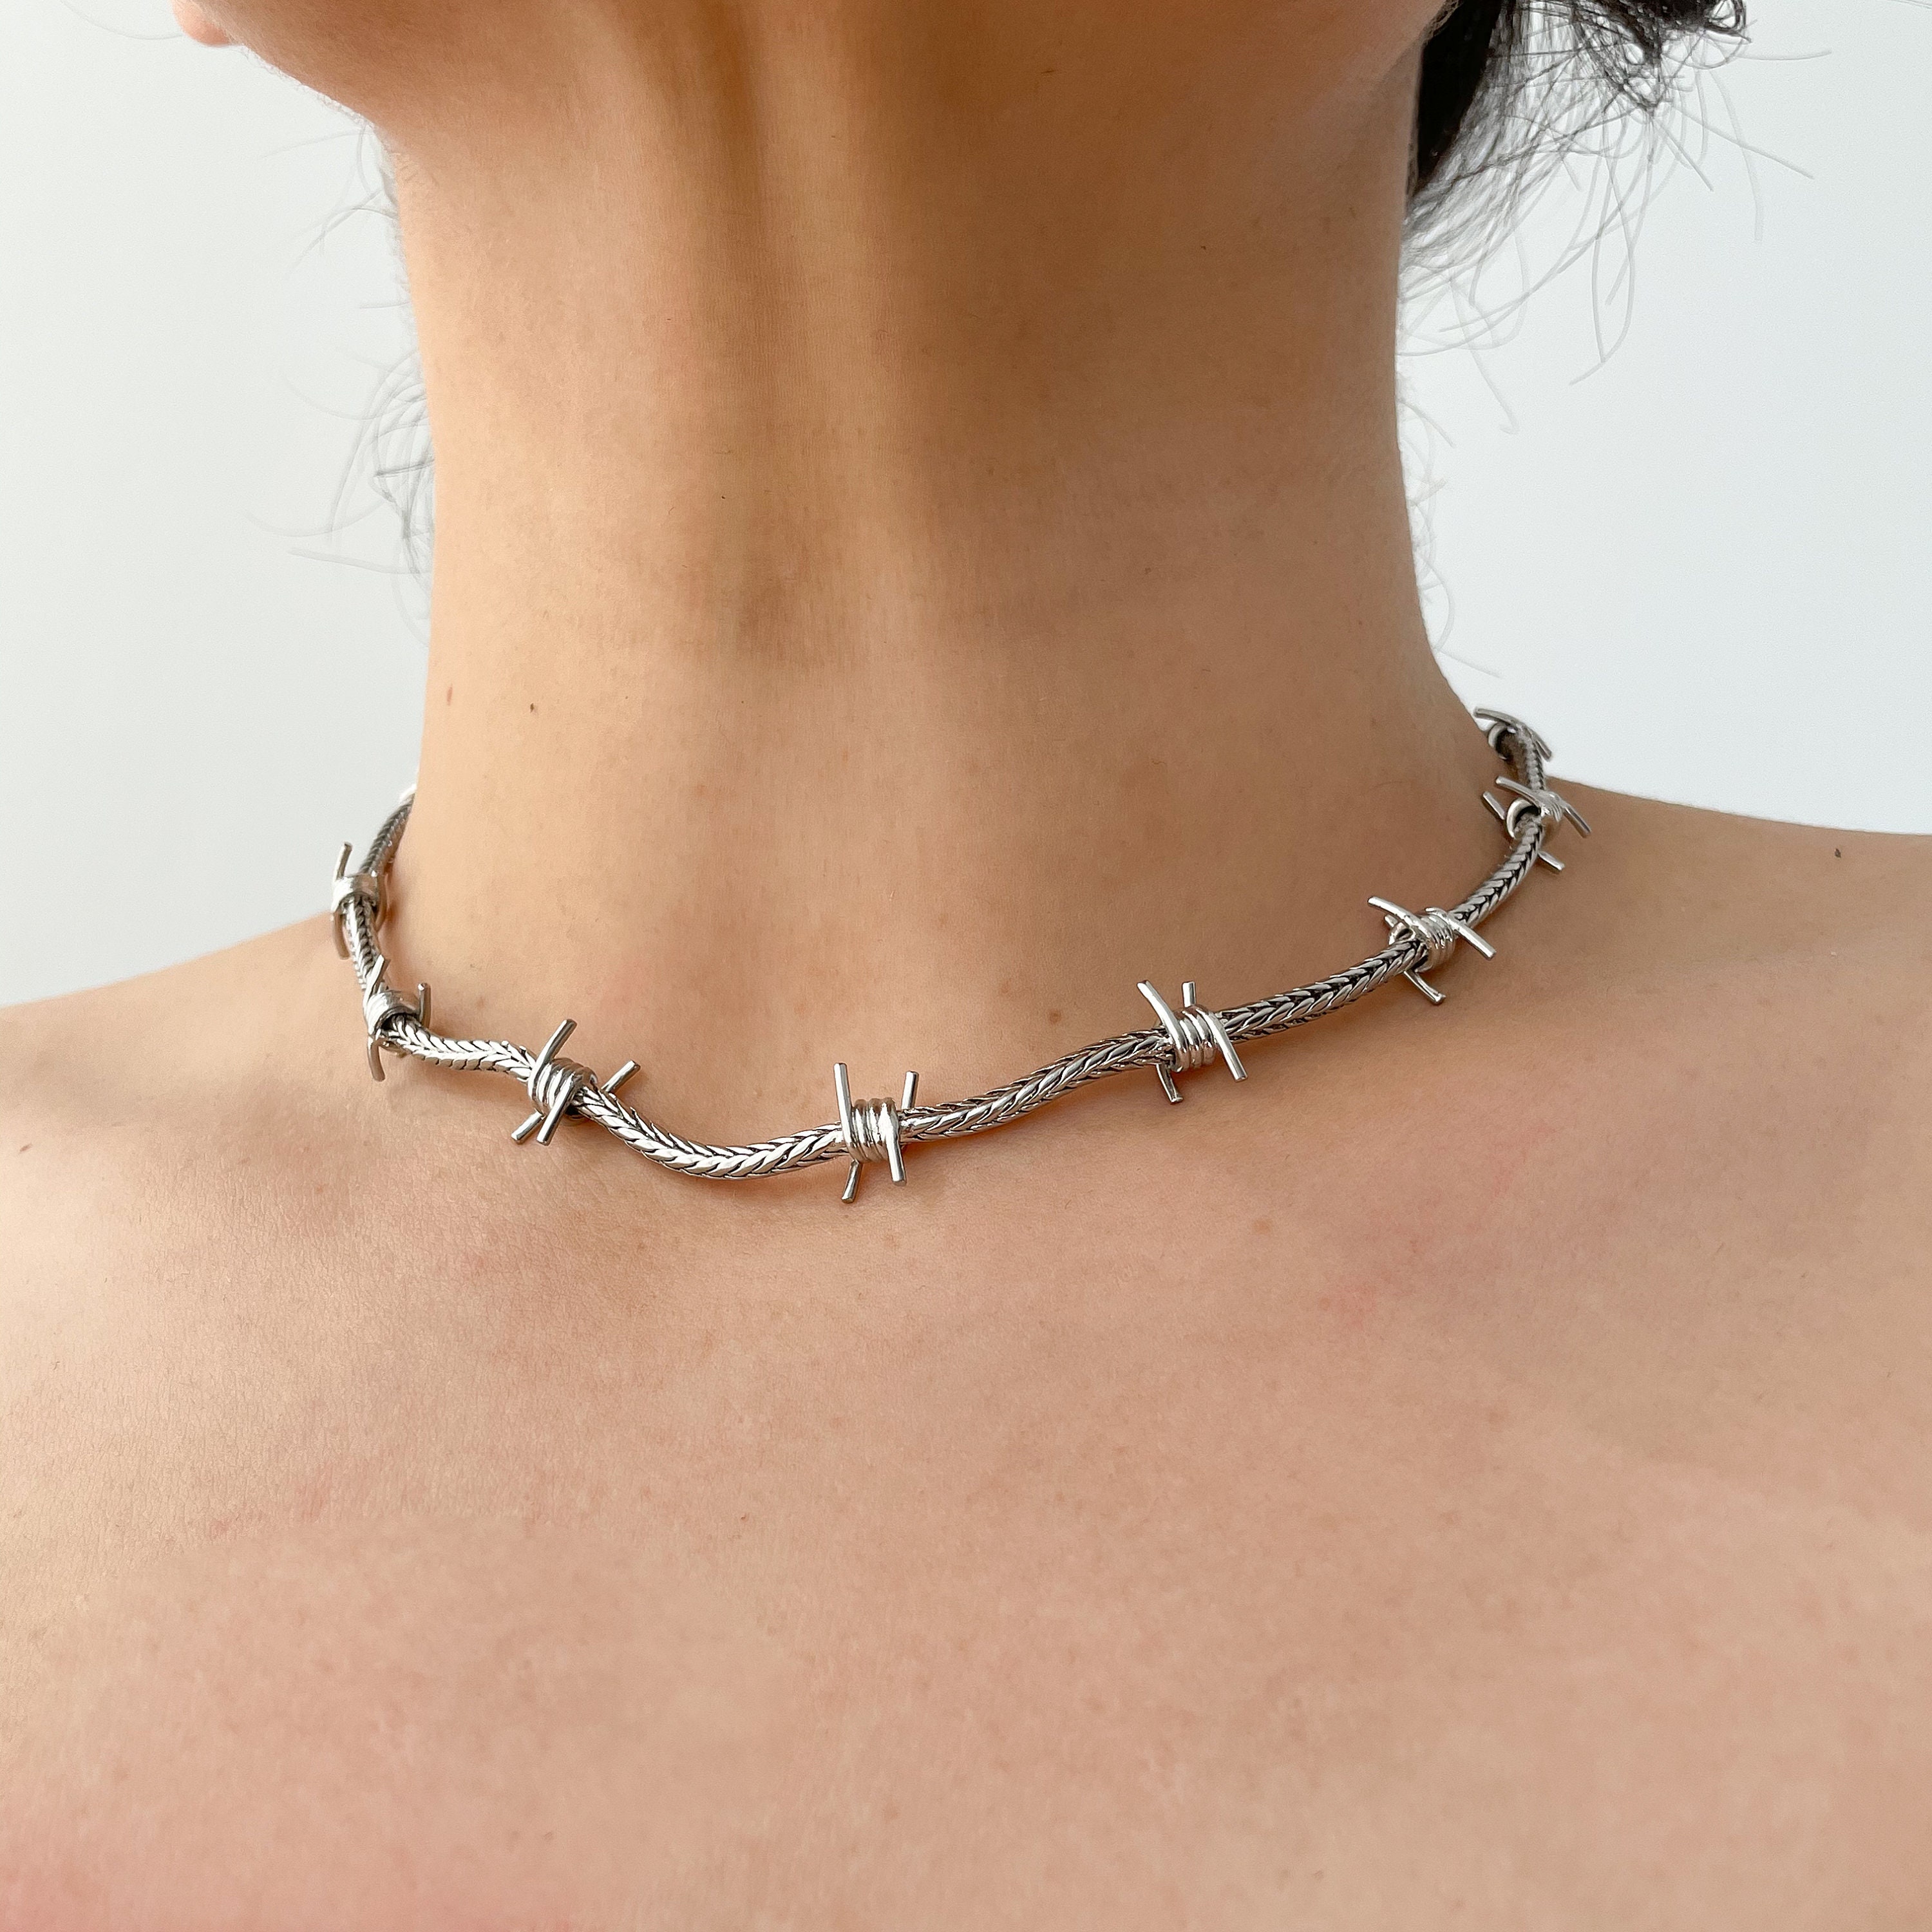 Punk Emo Goth Silver Barbed Wire Chain Necklace & Death Moth Pendant | eBay